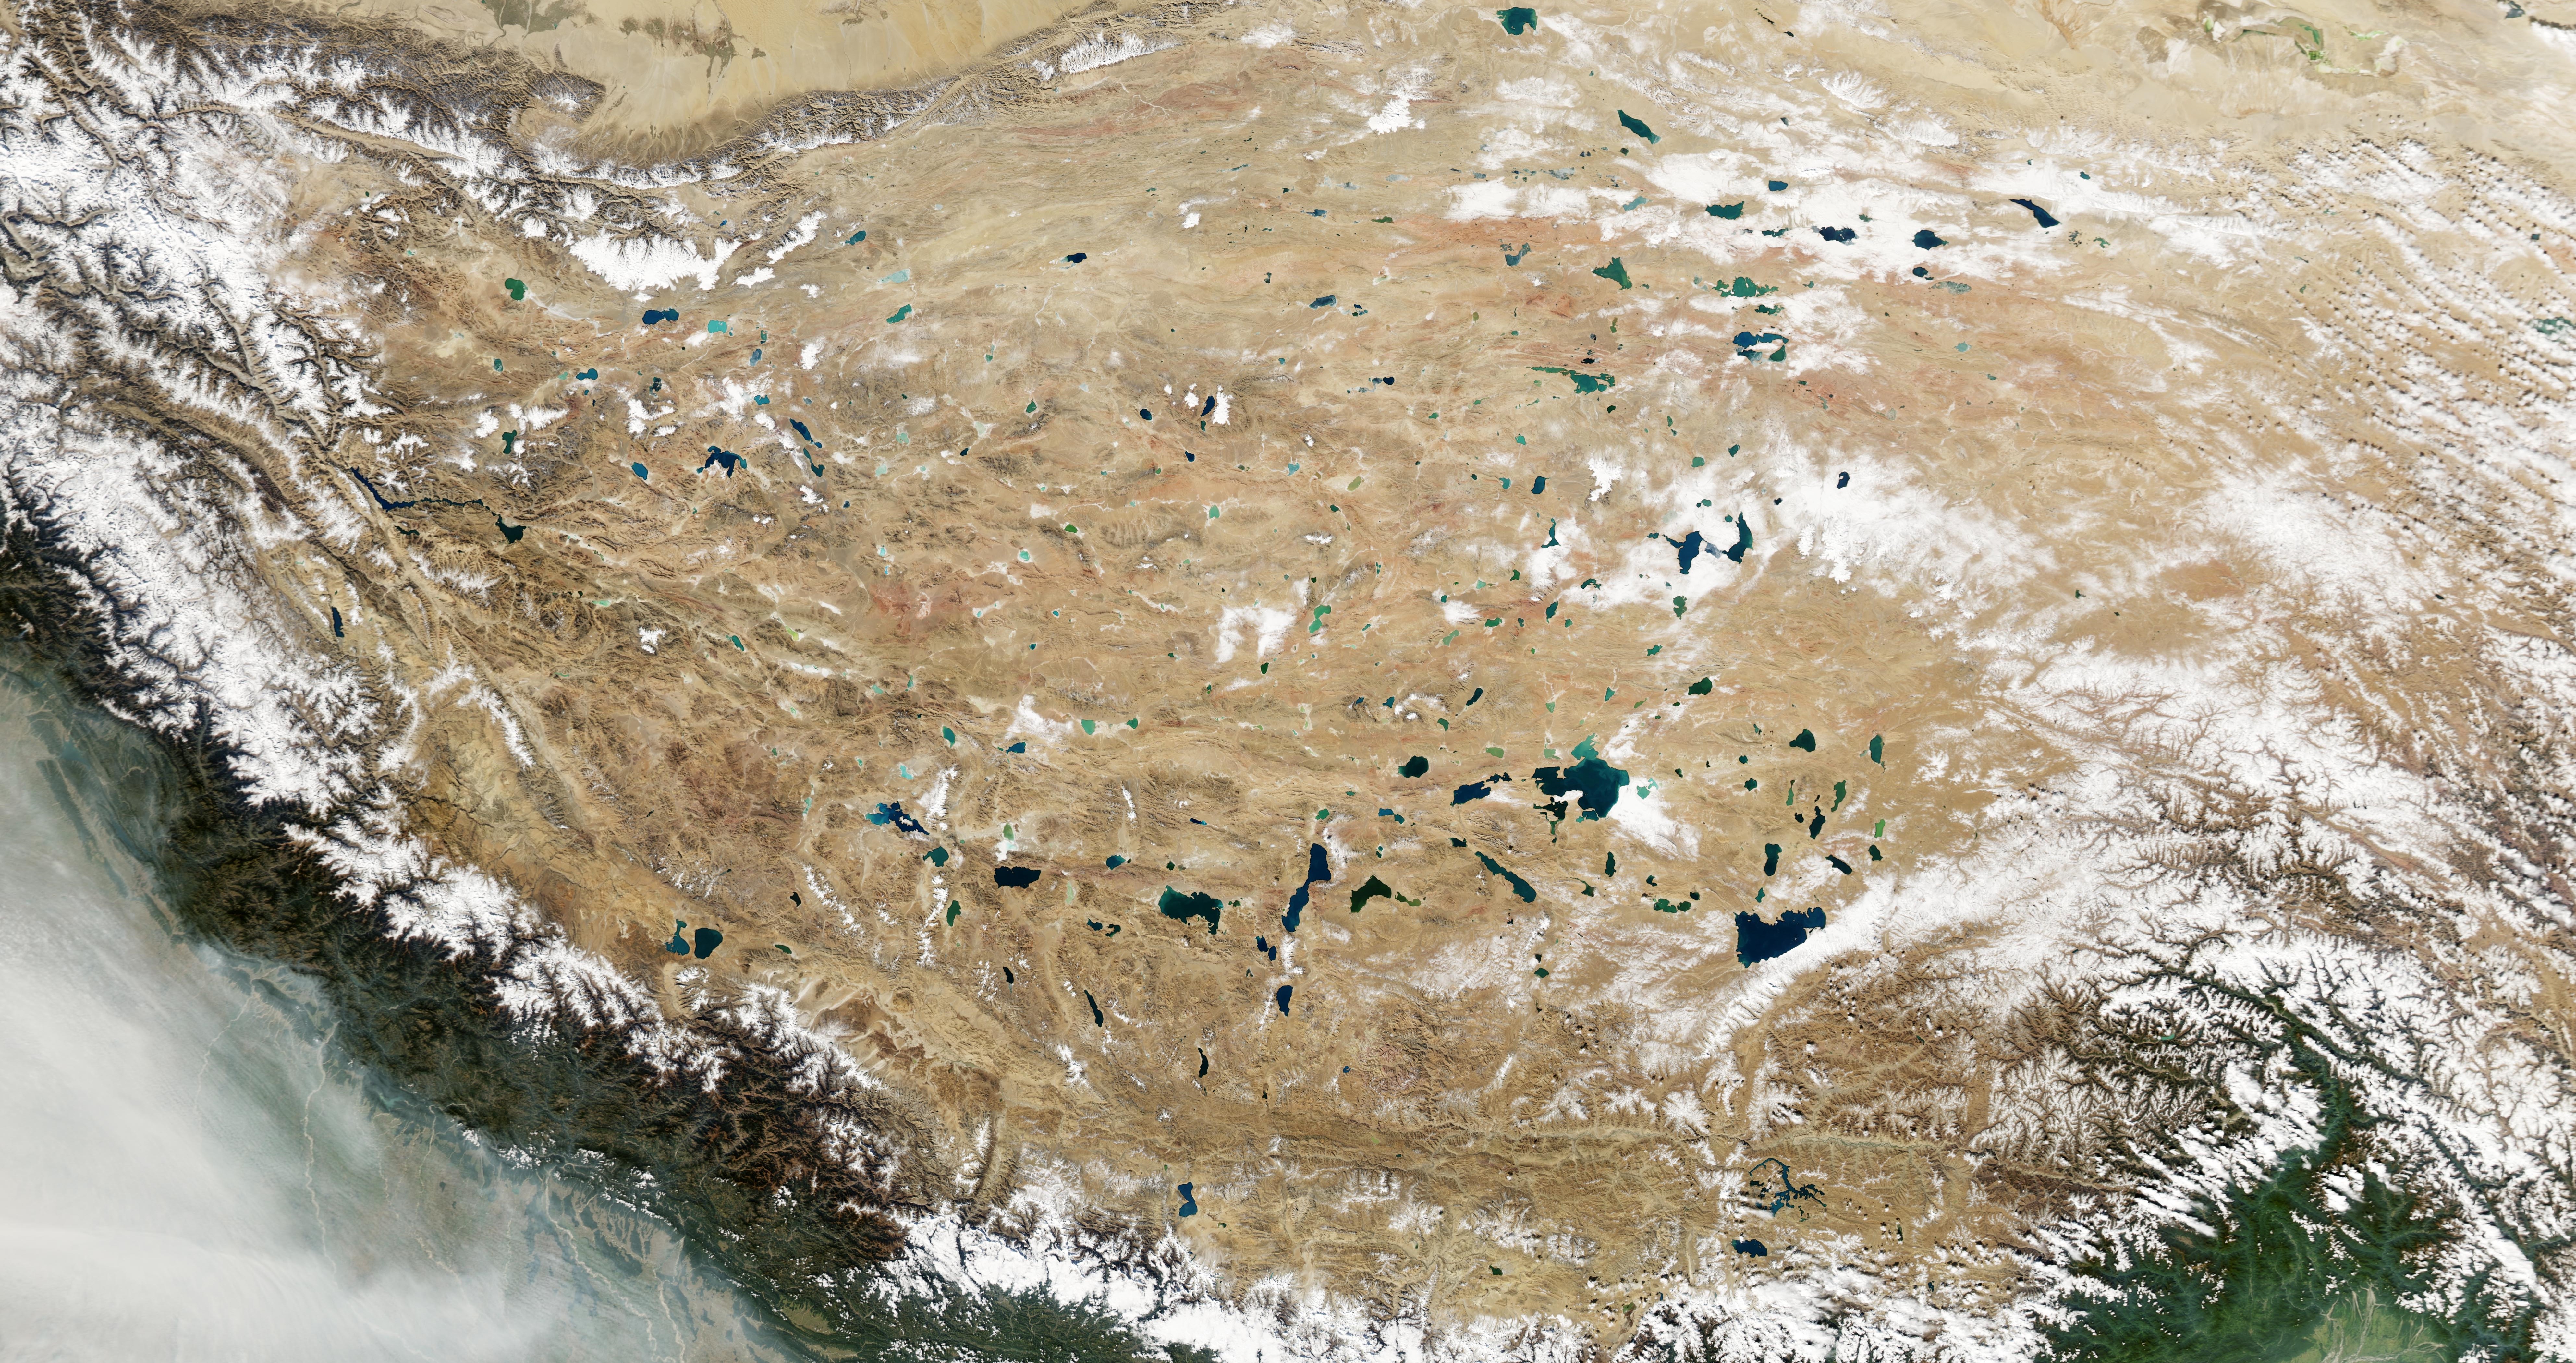 MODIS view of the Tibetan Plateau showing numerous lakes